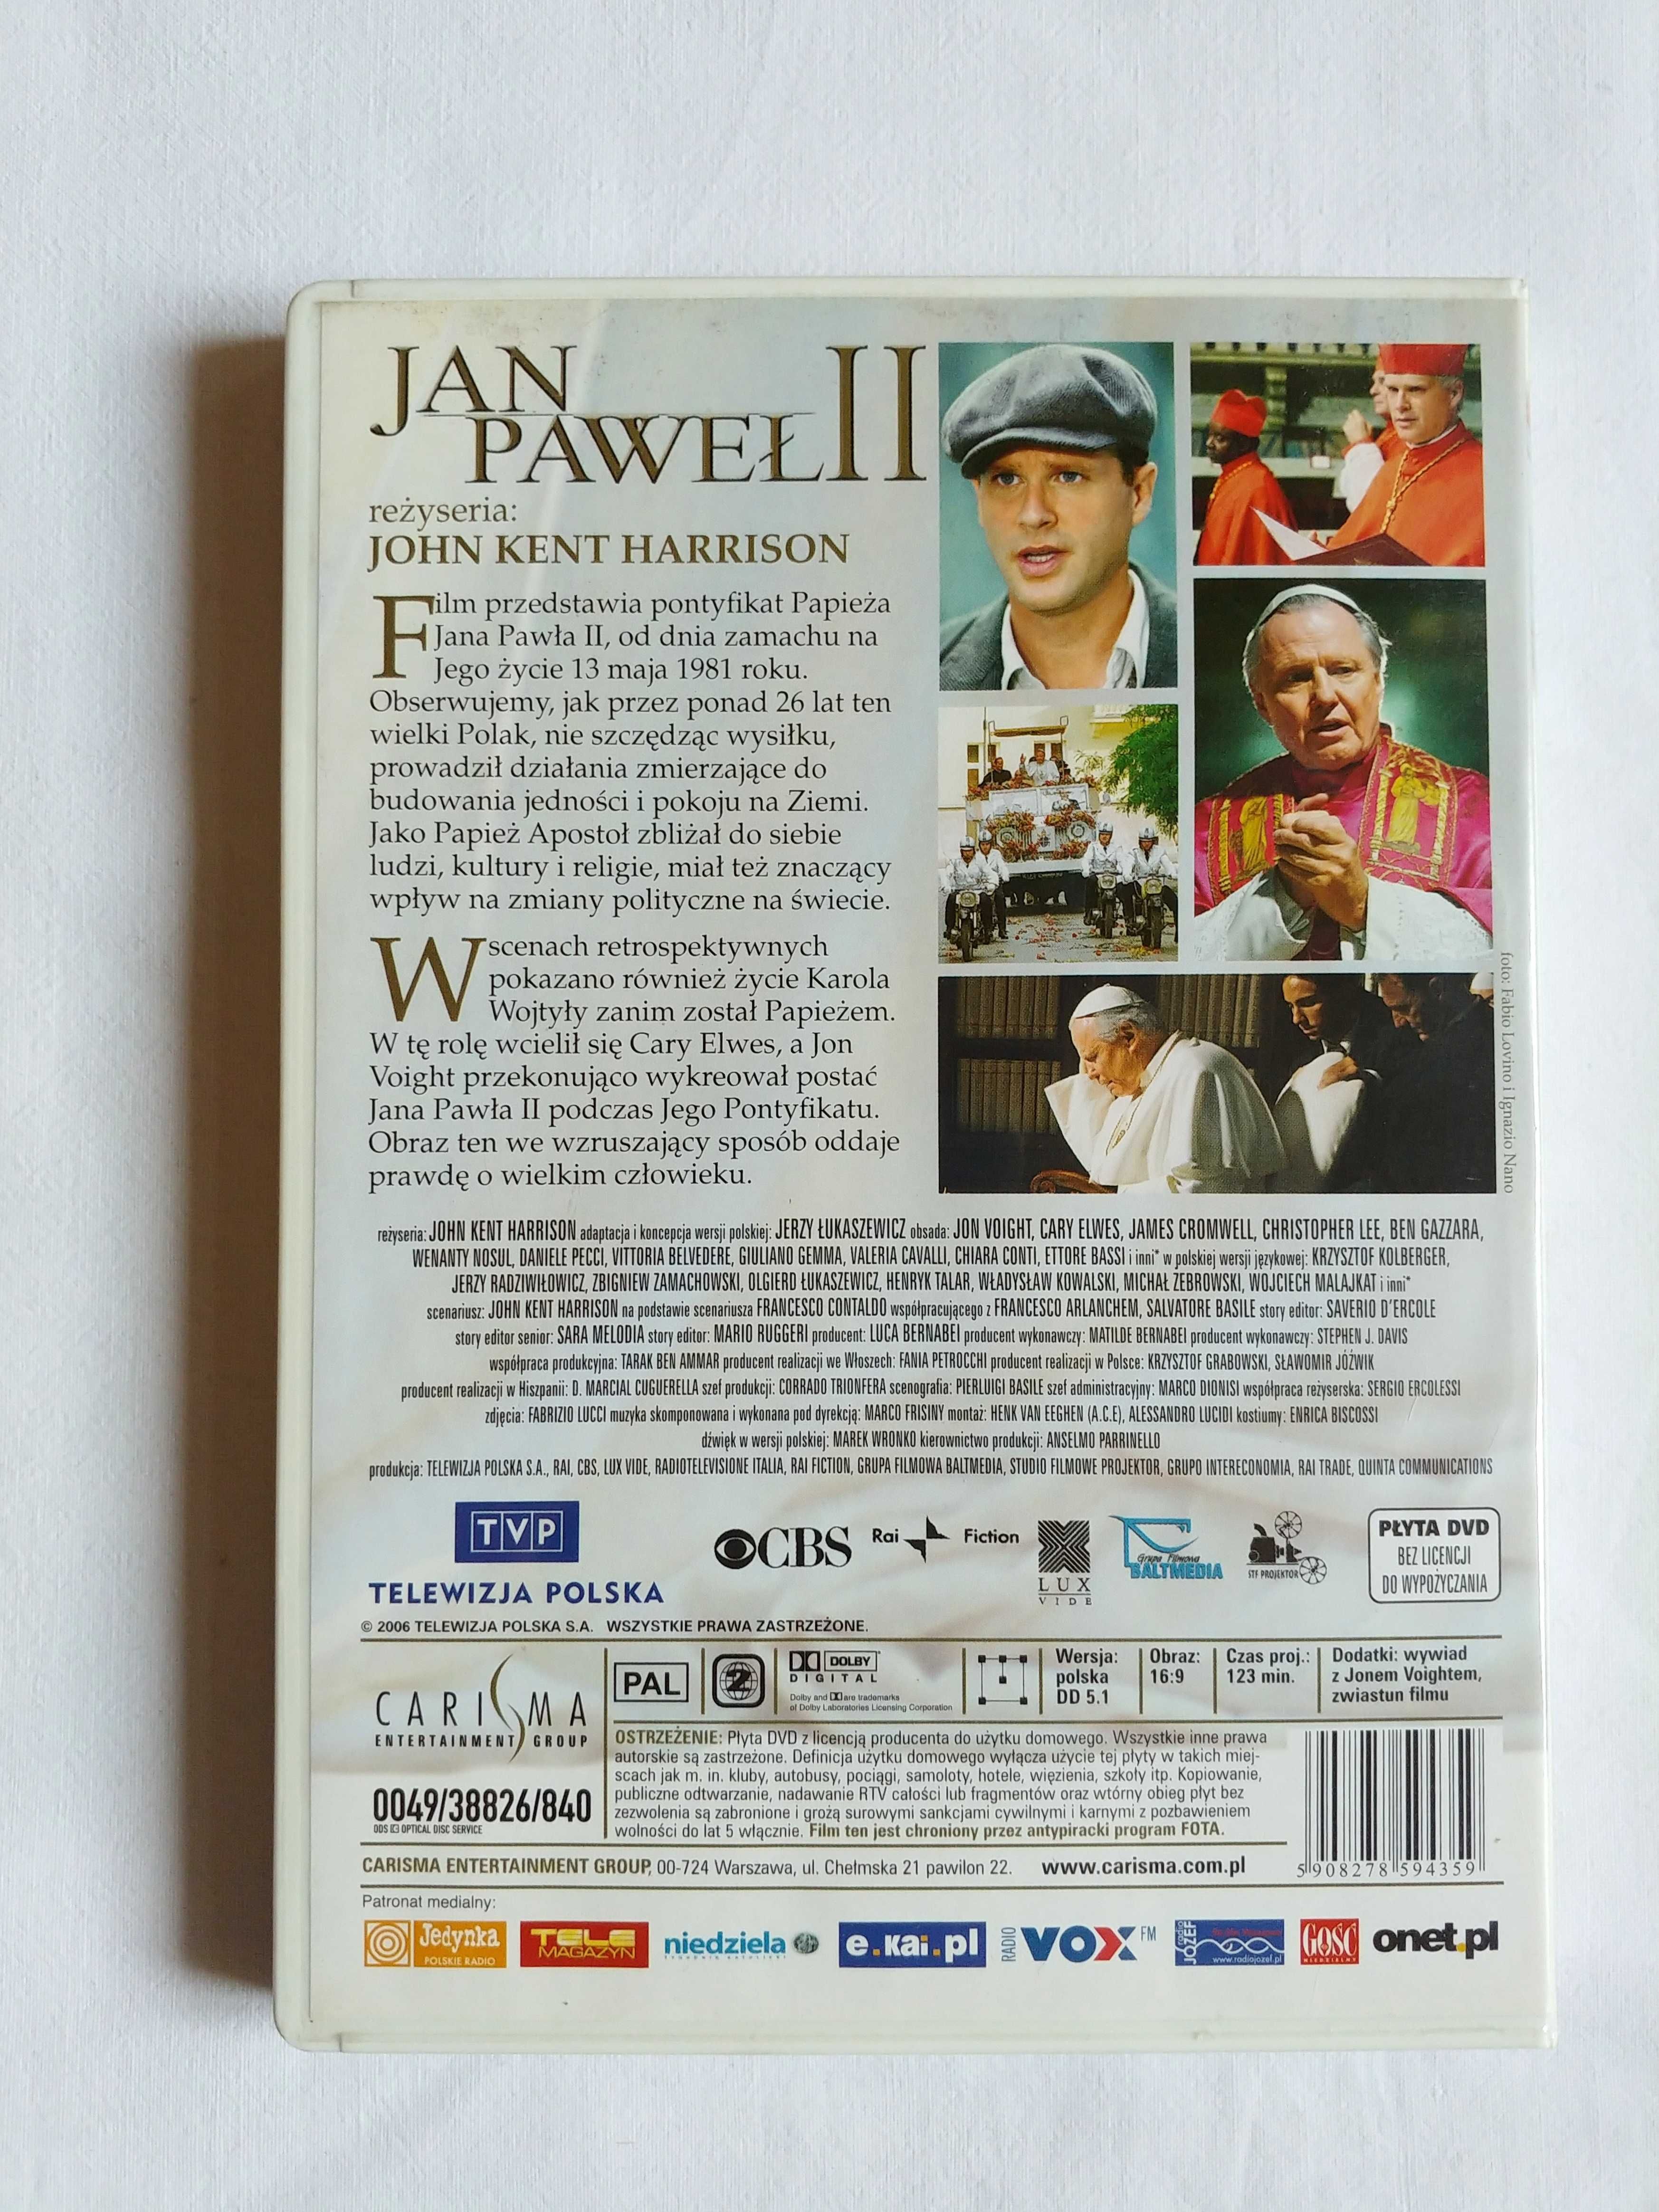 Jan Paweł II - Pope John Paul II - 2005 DVD Jon Voight film